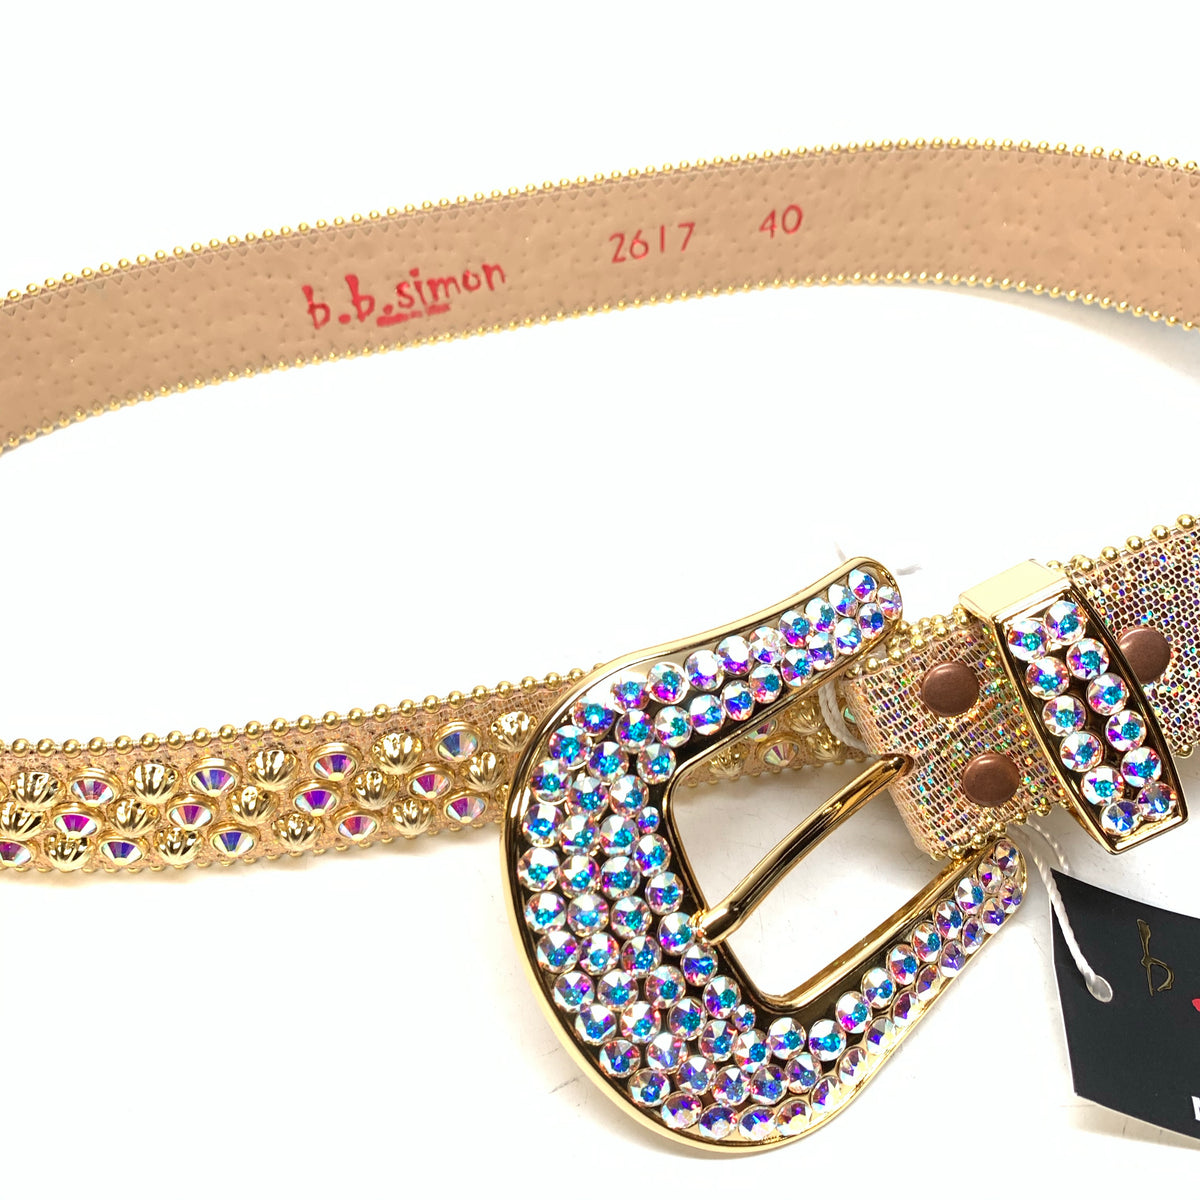 b.b. Simon Golden Teju Fully Loaded Crystal Belt - Dudes Boutique